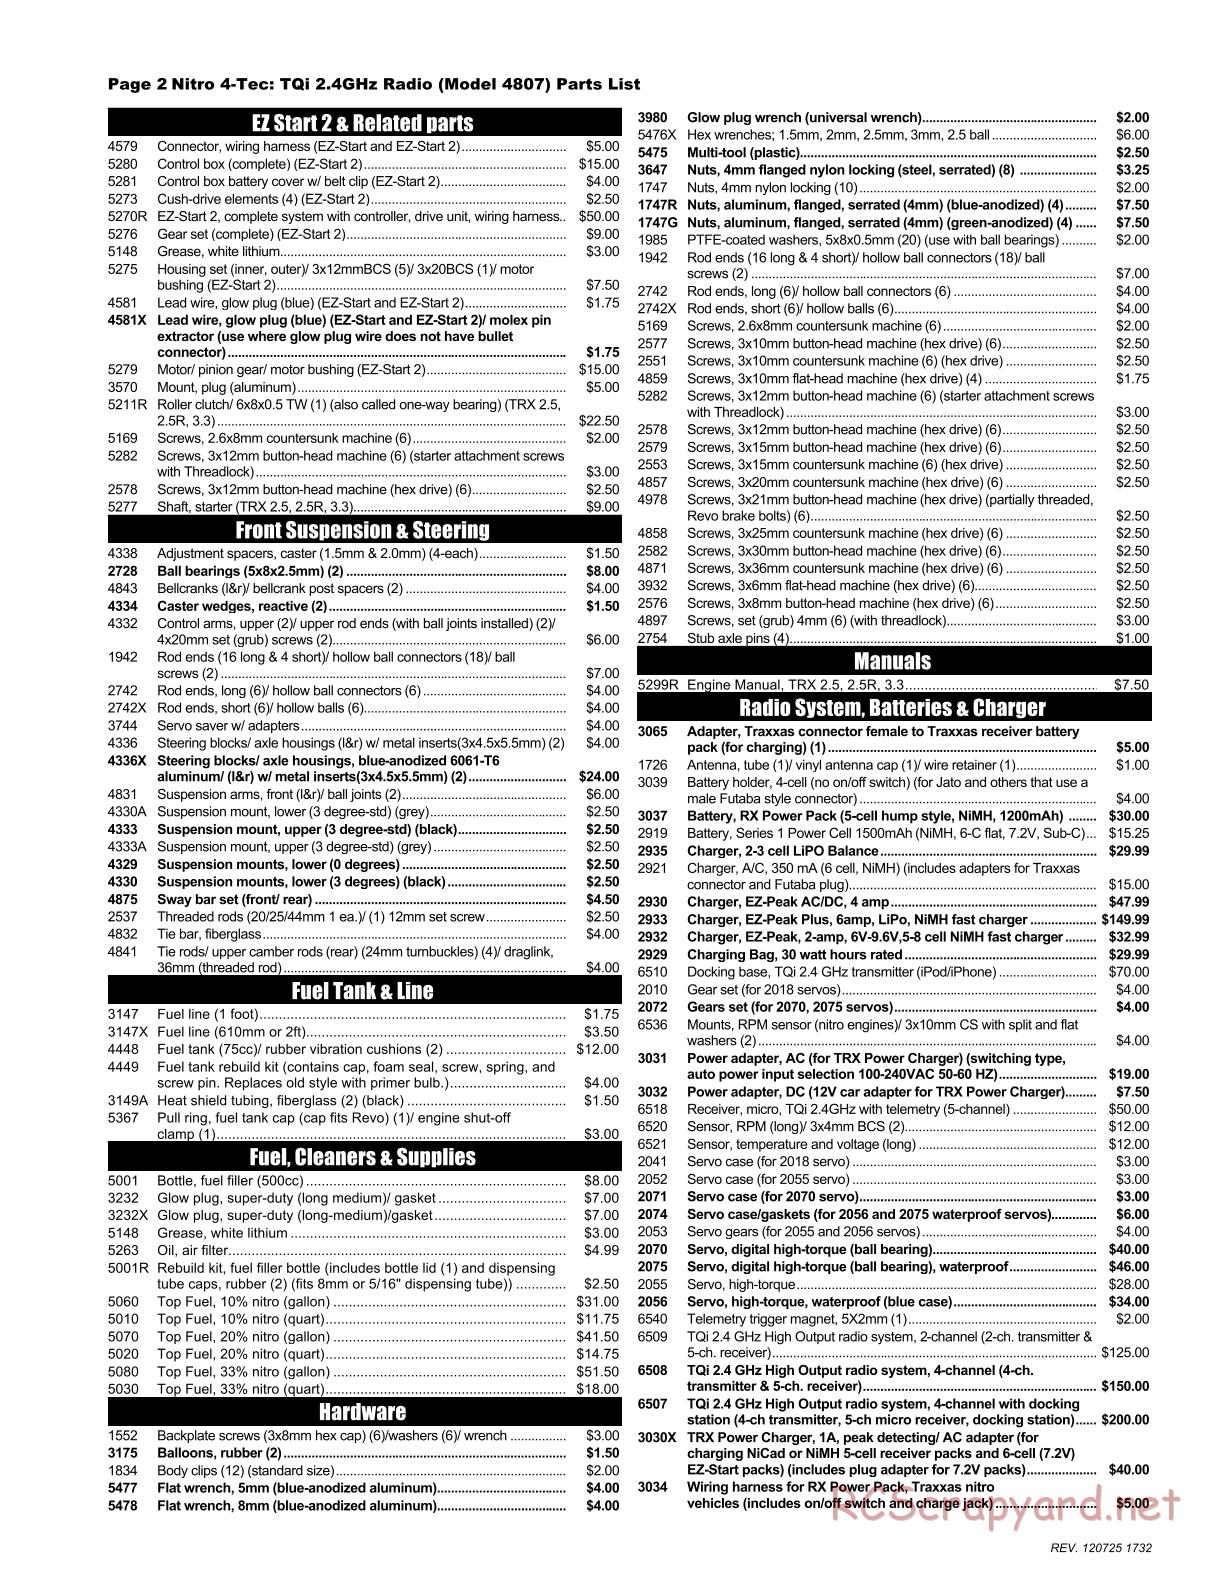 Traxxas - Nitro 4-Tec 3.3 (2010) - Parts List - Page 2